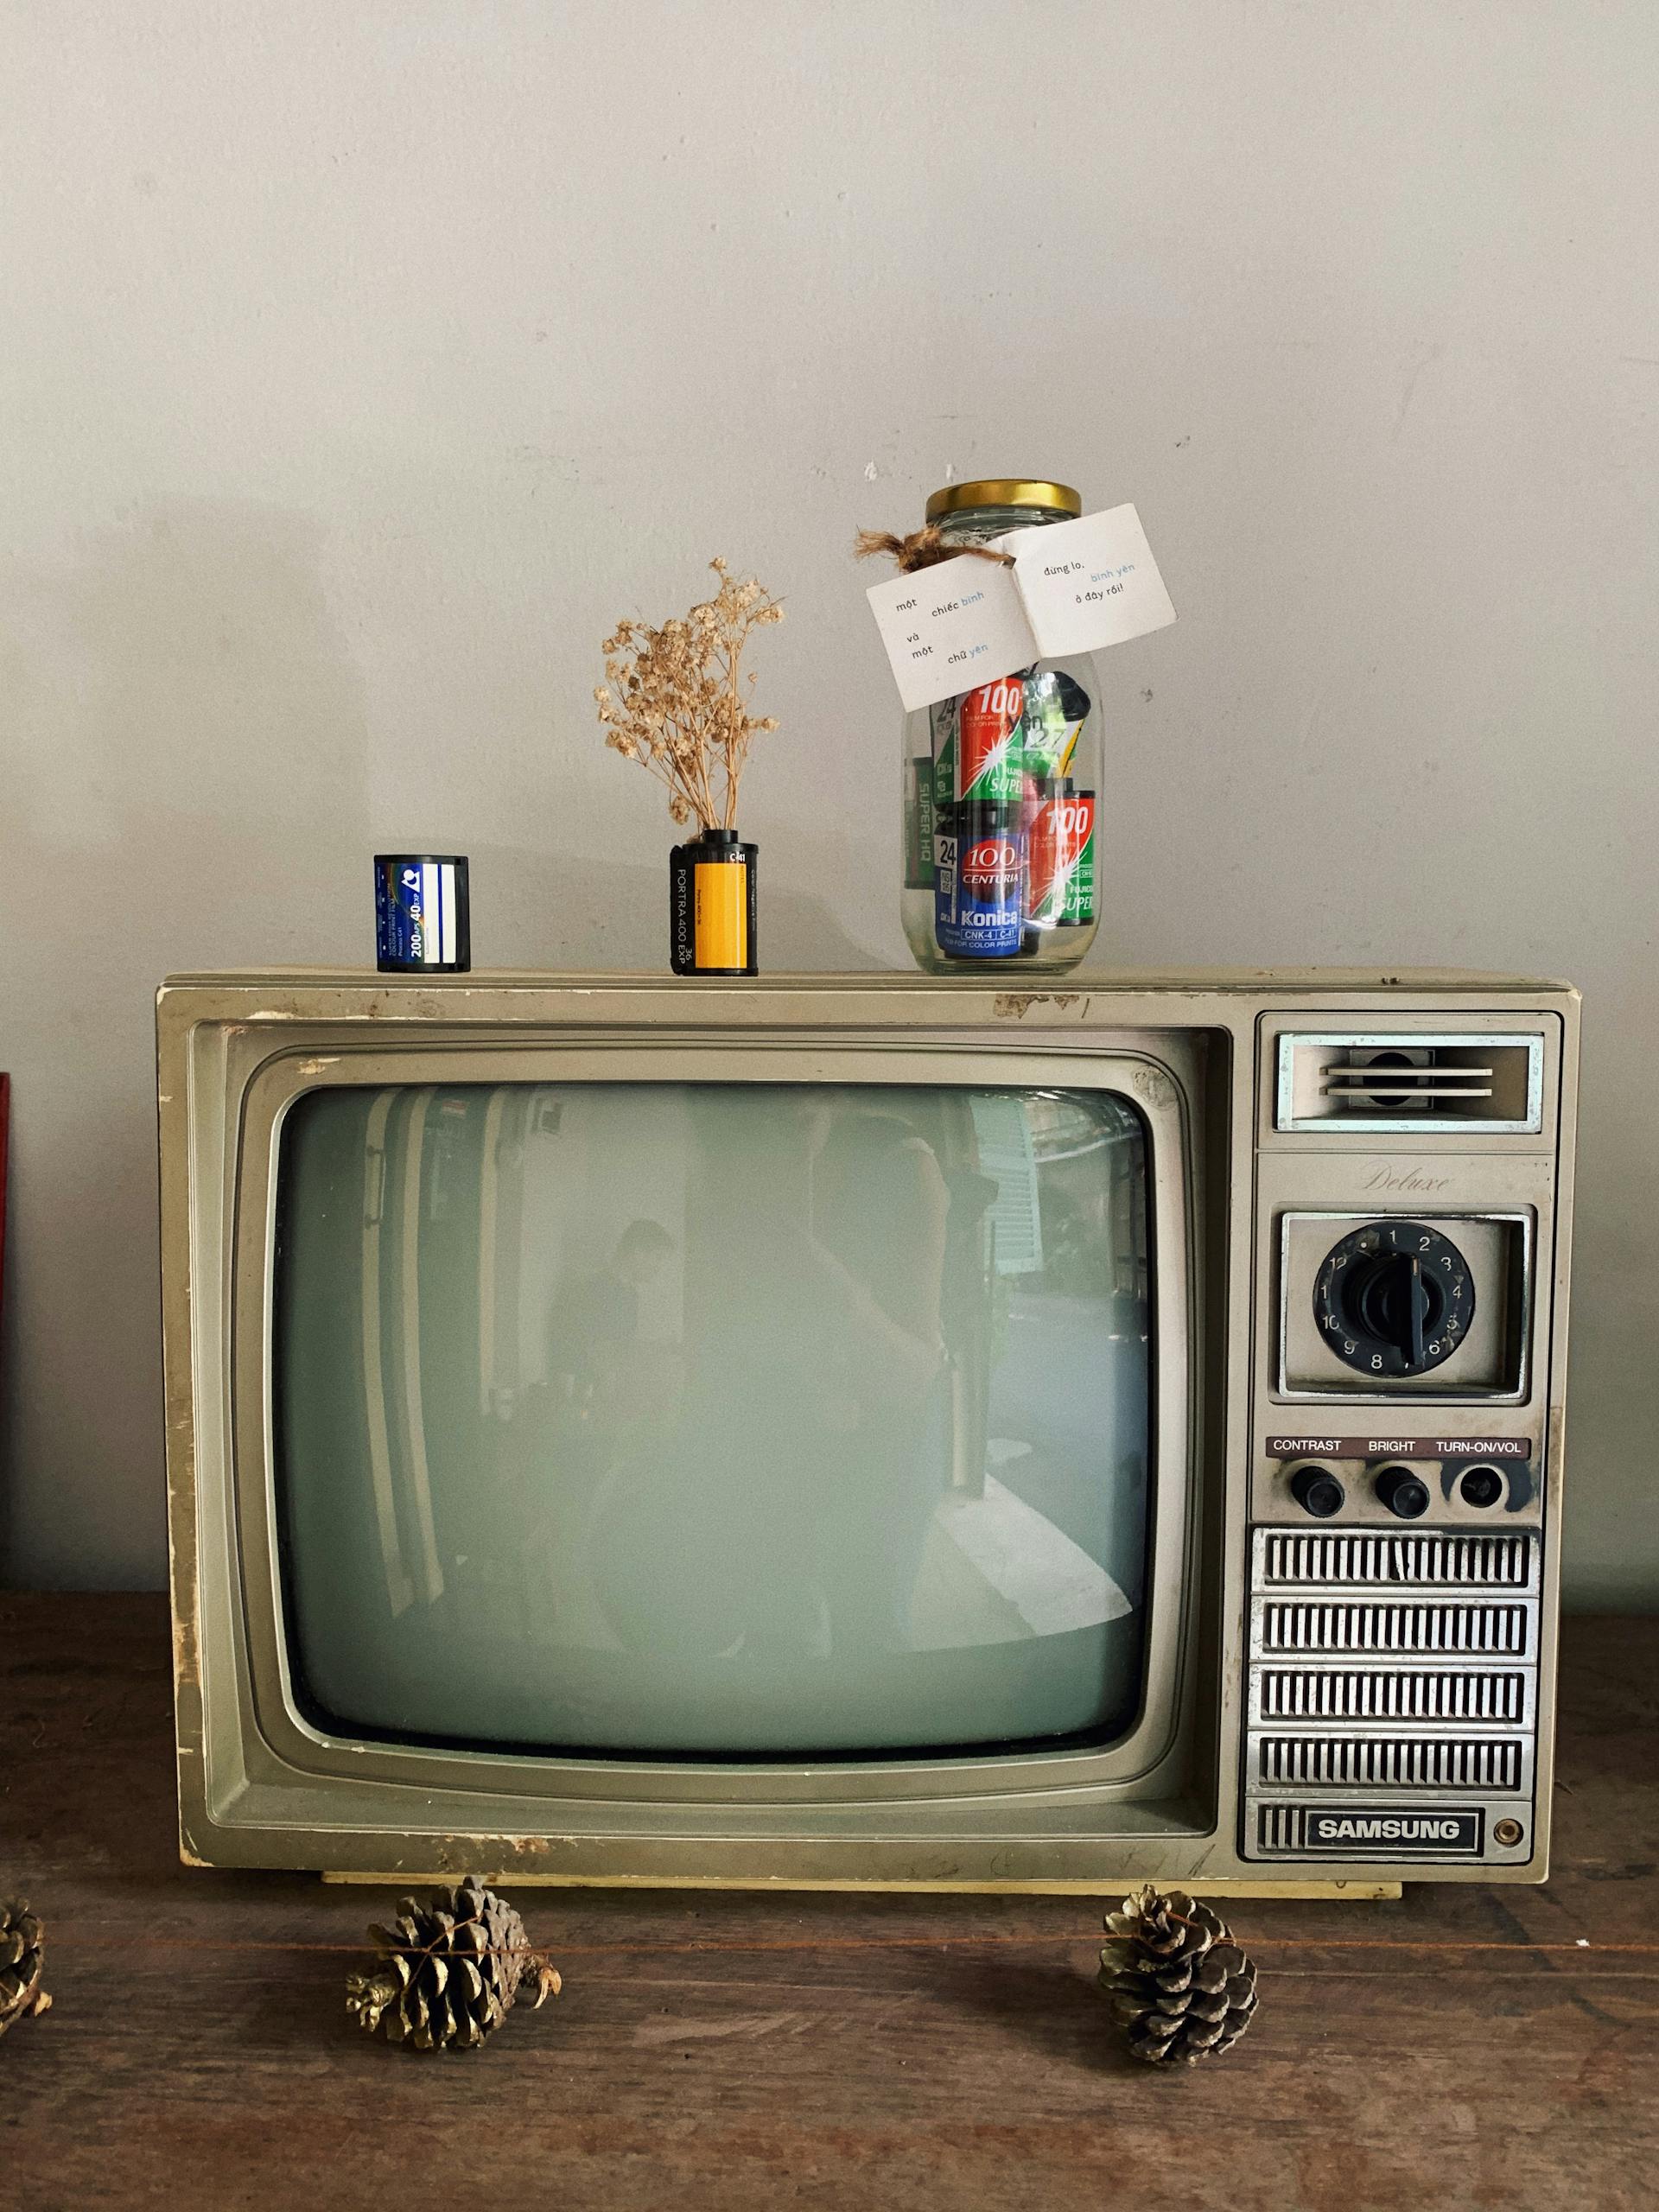 An old TV set | Source: Pexels